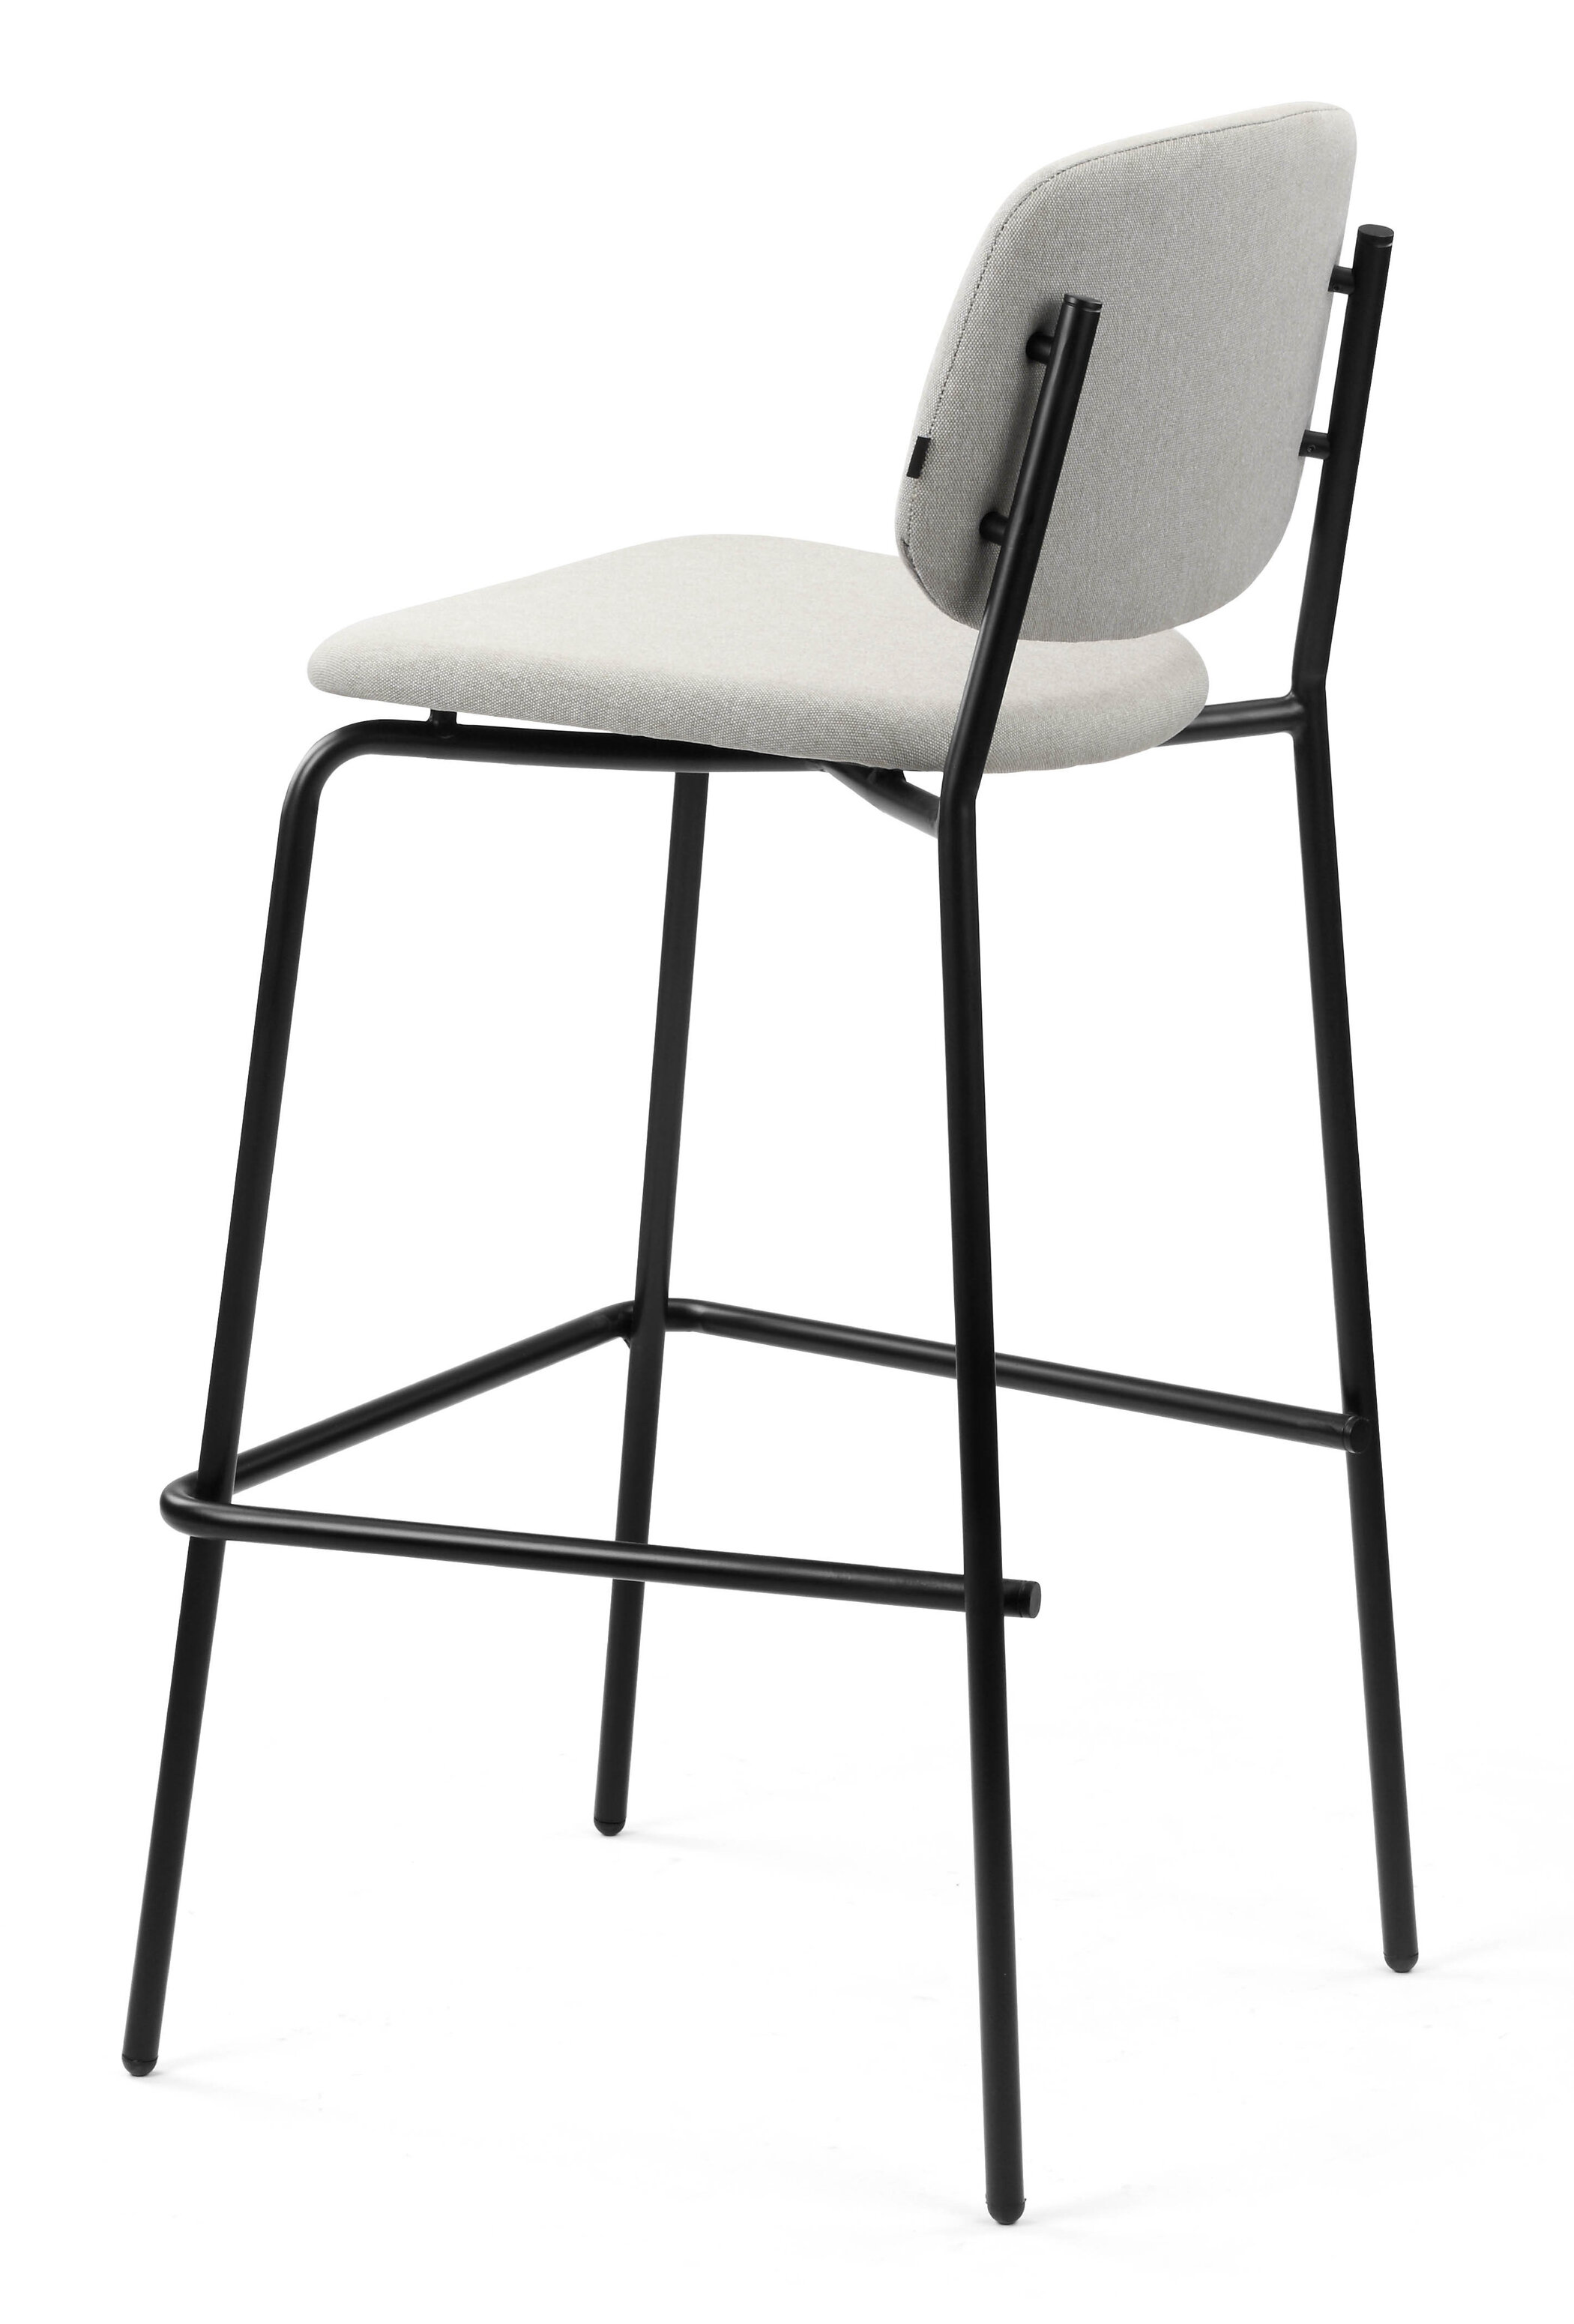 WS - Platform high stool - UPH Grey (Back angle)